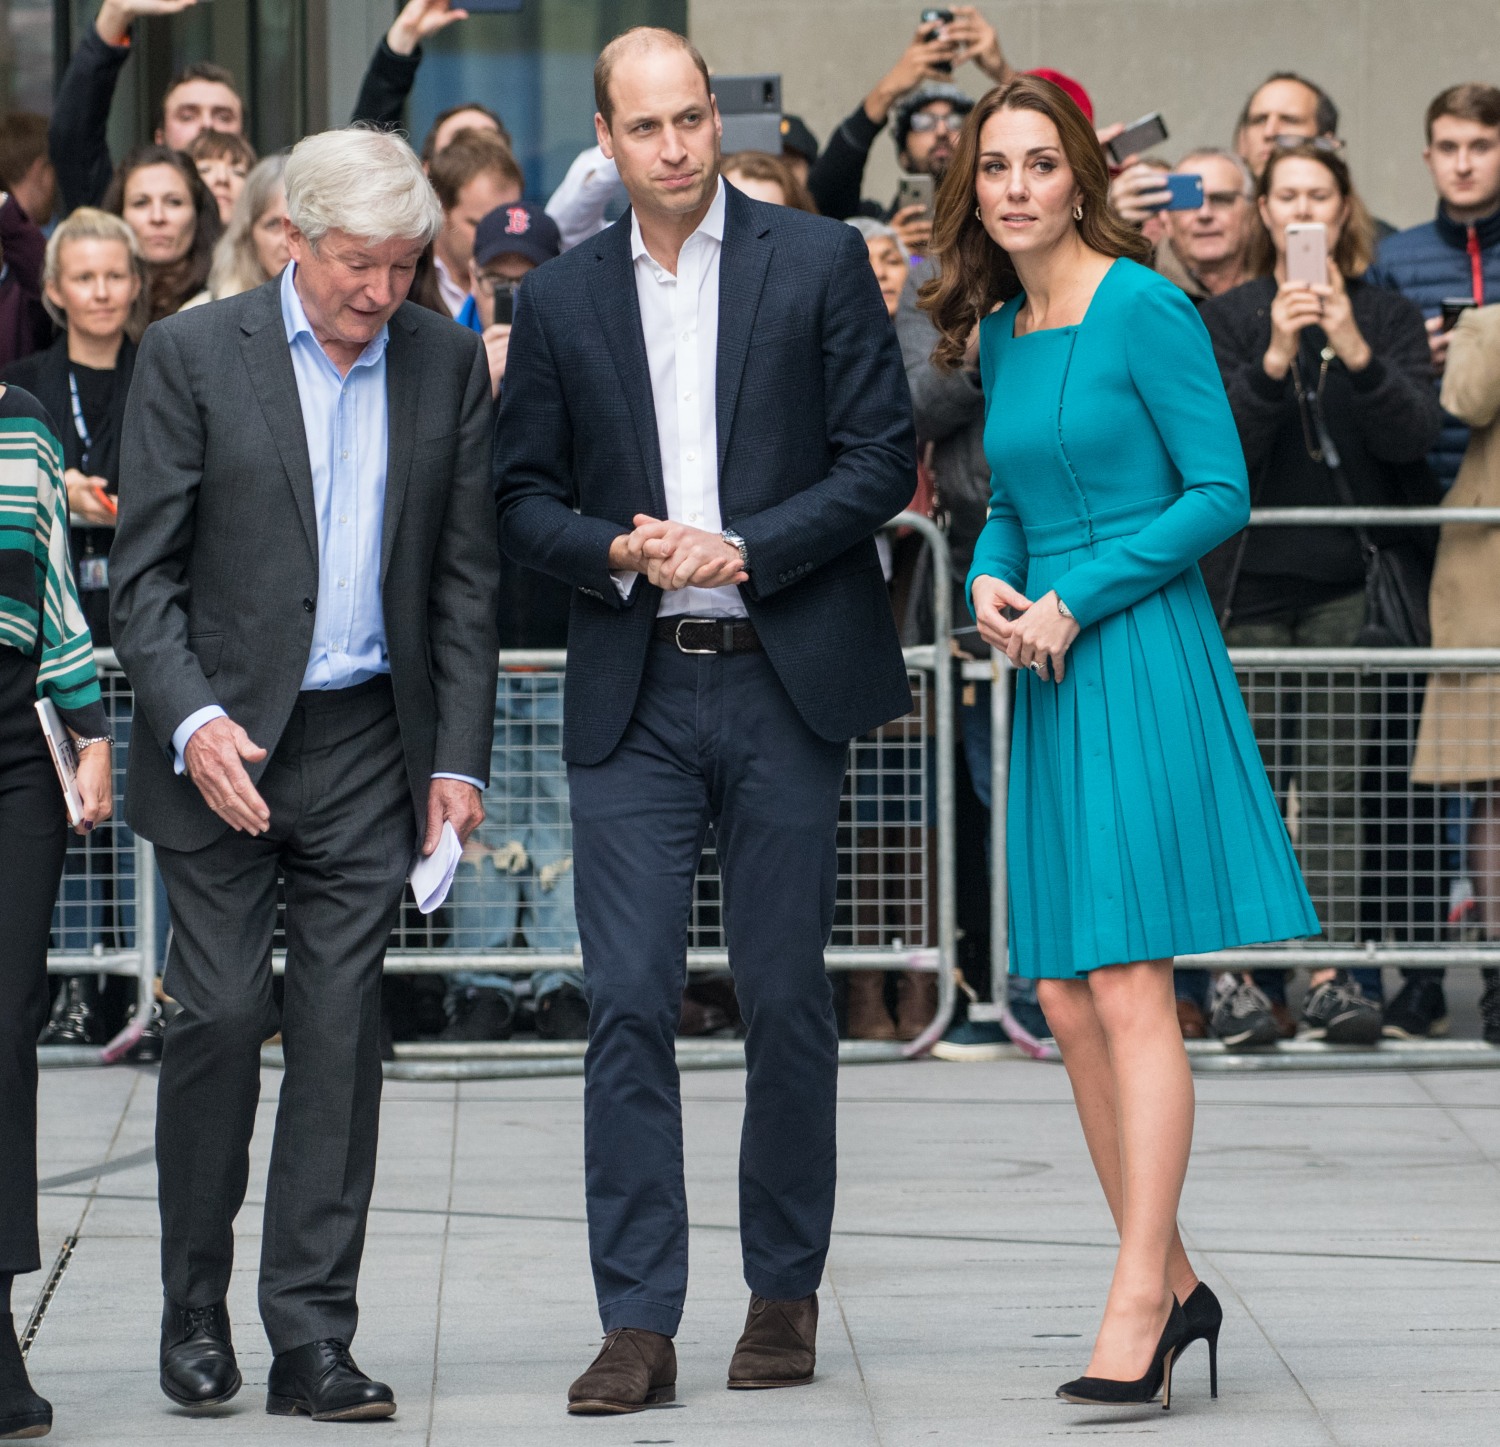 Prince William, Duke of Cambridge and Catherine, Duchess of Cambridge visit the BBC